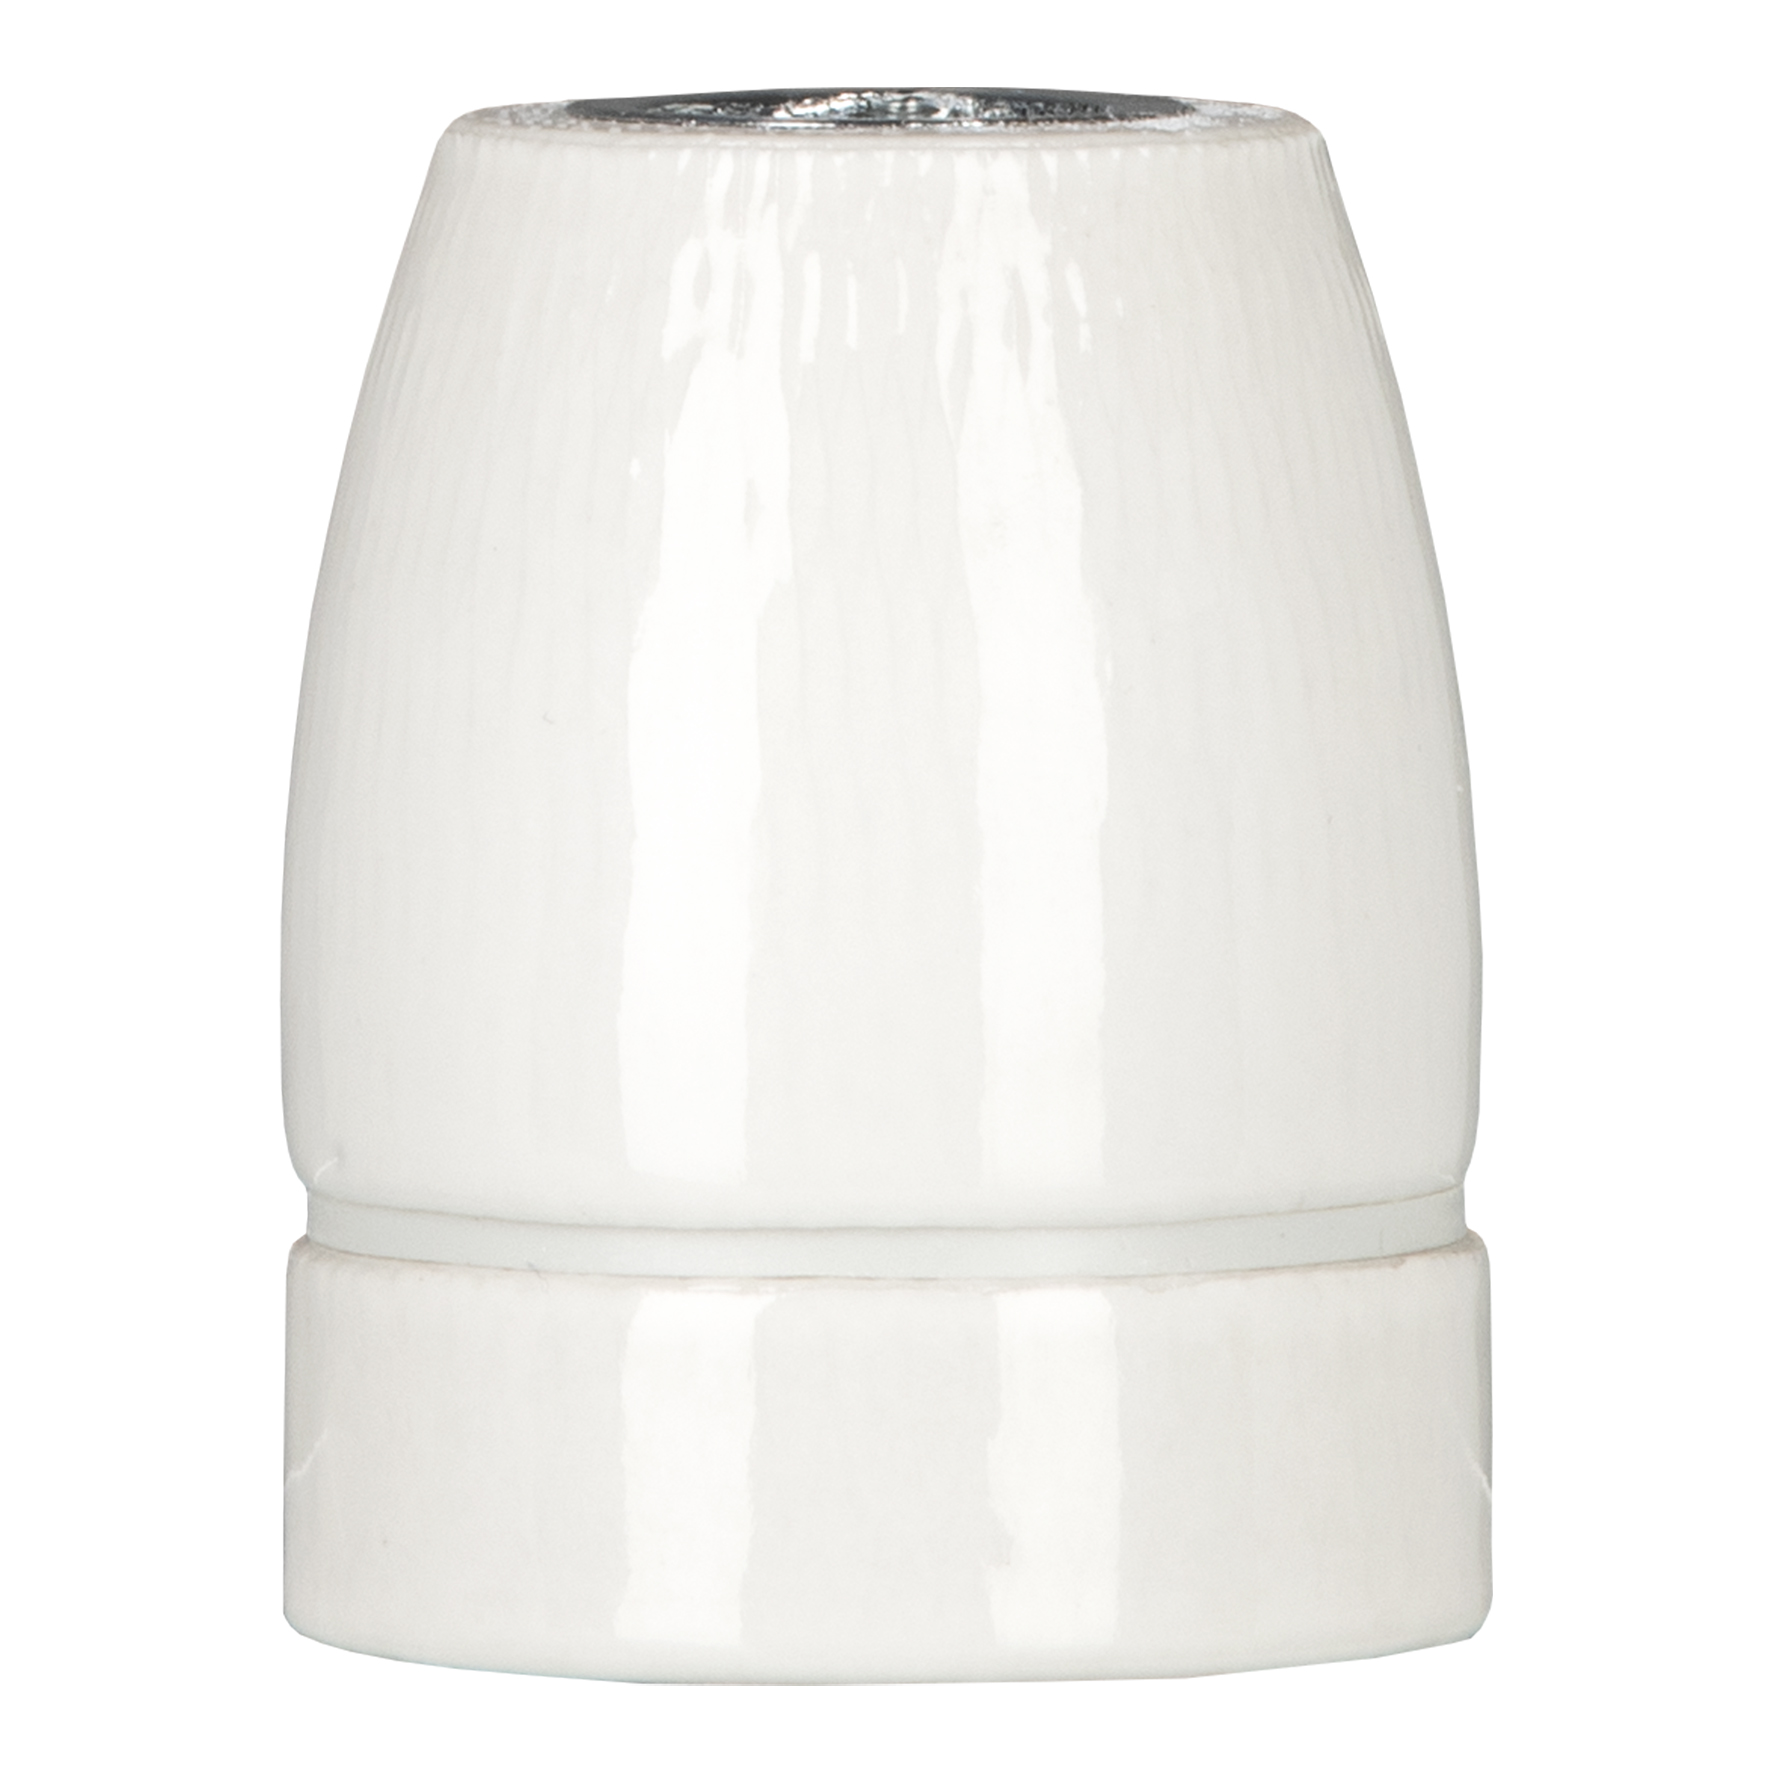 VS 534833 E27 Lampholder G3/8A Porcelain White